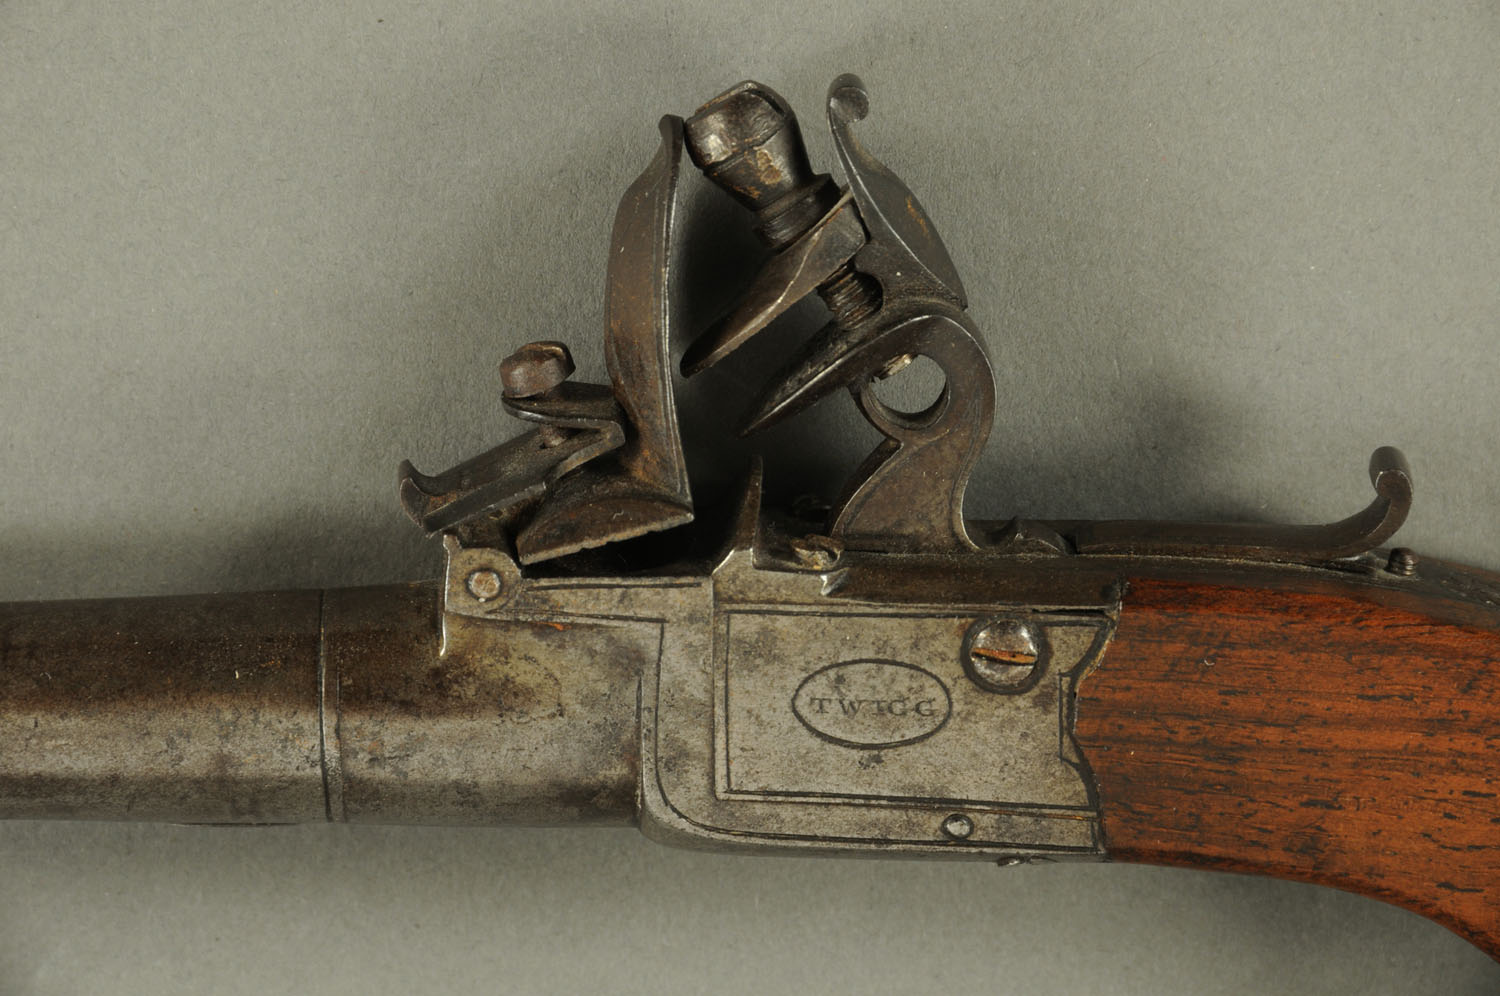 A flintlock pocket pistol, late 18th century, engraved "Twigg, London", - Image 2 of 7